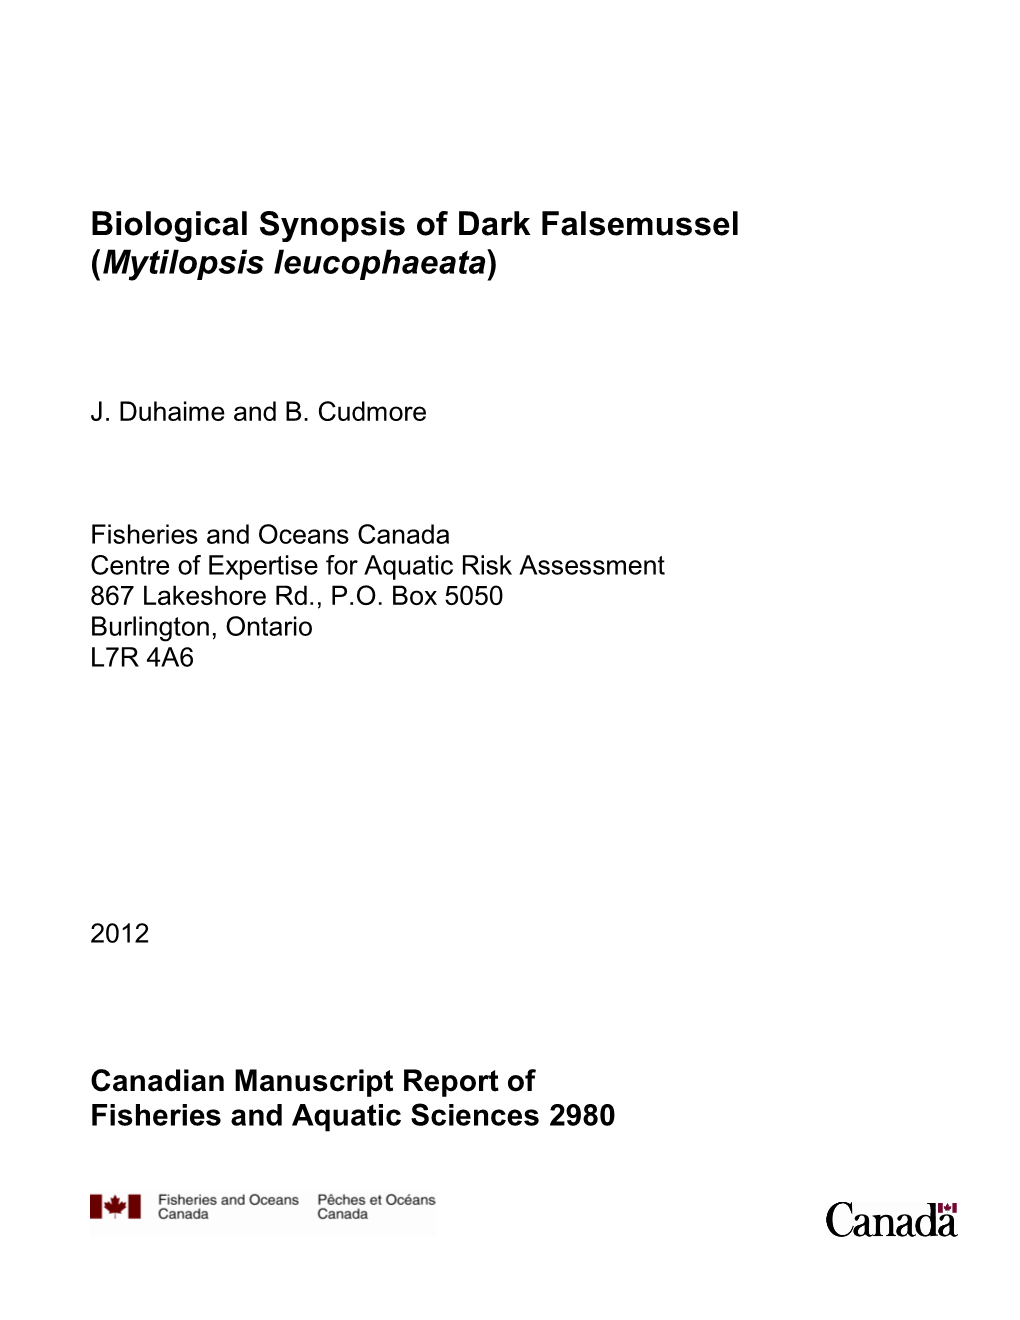 Biological Synopsis of Dark Falsemussel (Mytilopsis Leucophaeata)